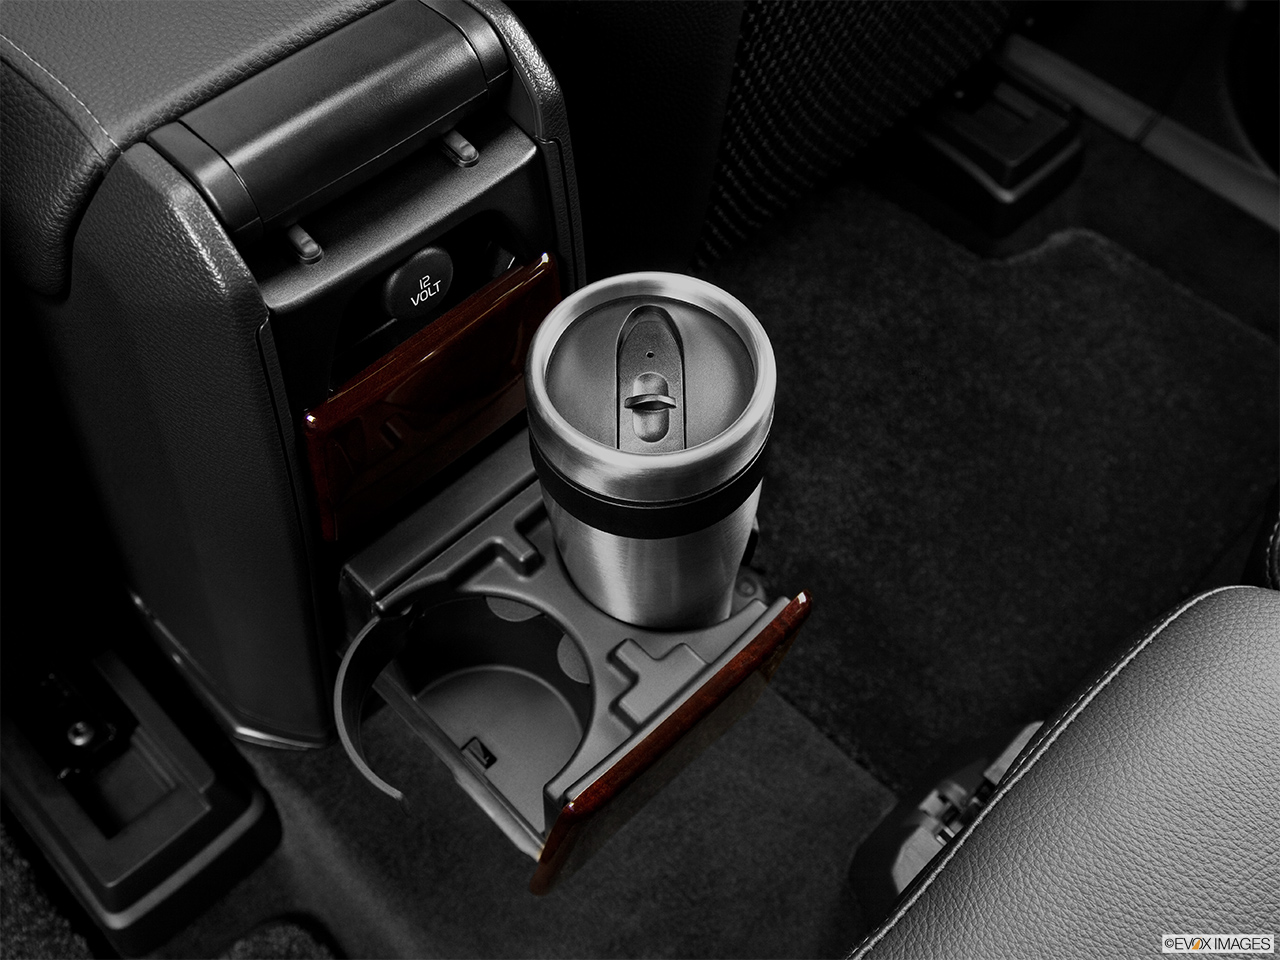 2014 Volvo XC90 3.2 FWD Premier Plus Cup holder prop (quaternary). 